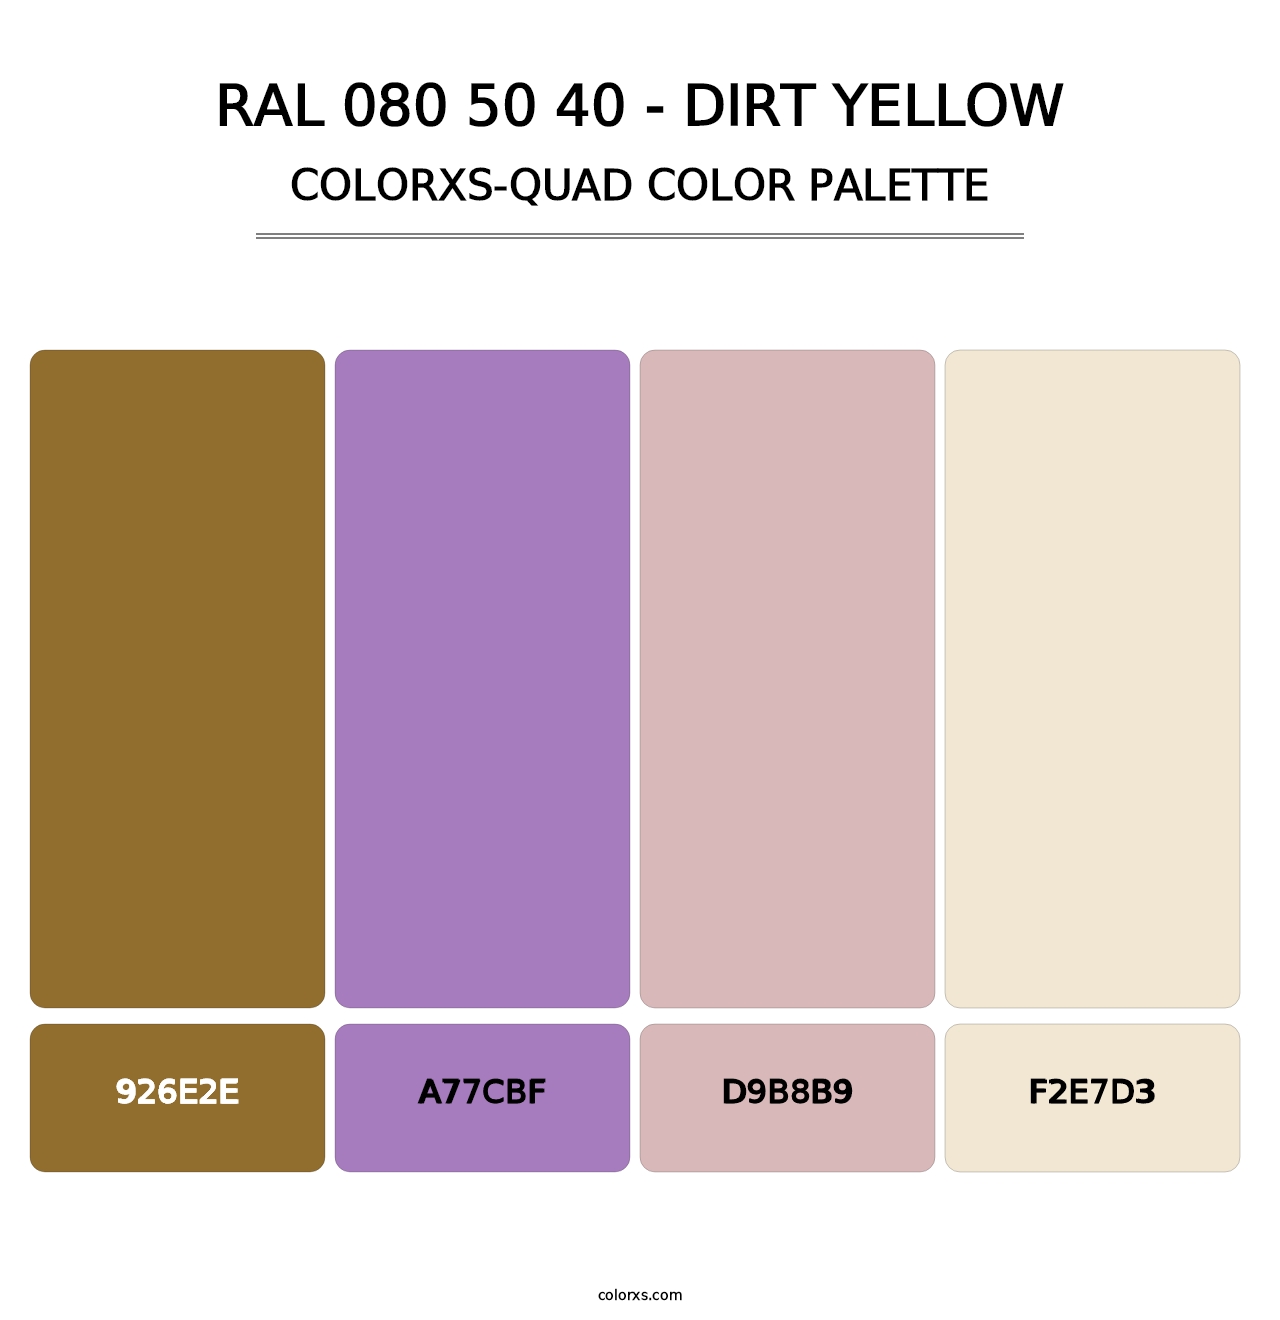 RAL 080 50 40 - Dirt Yellow - Colorxs Quad Palette